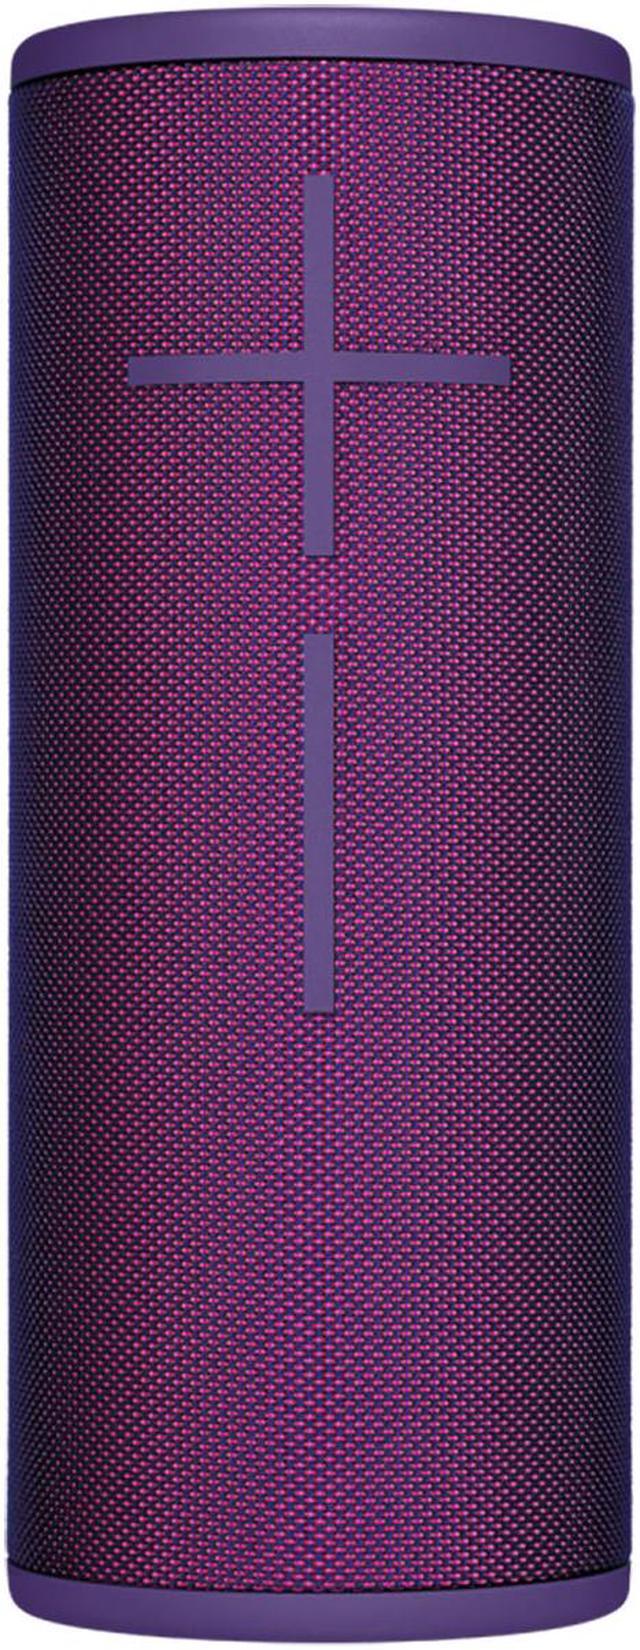 Ultimate Ears - Boom 3 Portable Bluetooth Speaker - Ultraviolet Purple